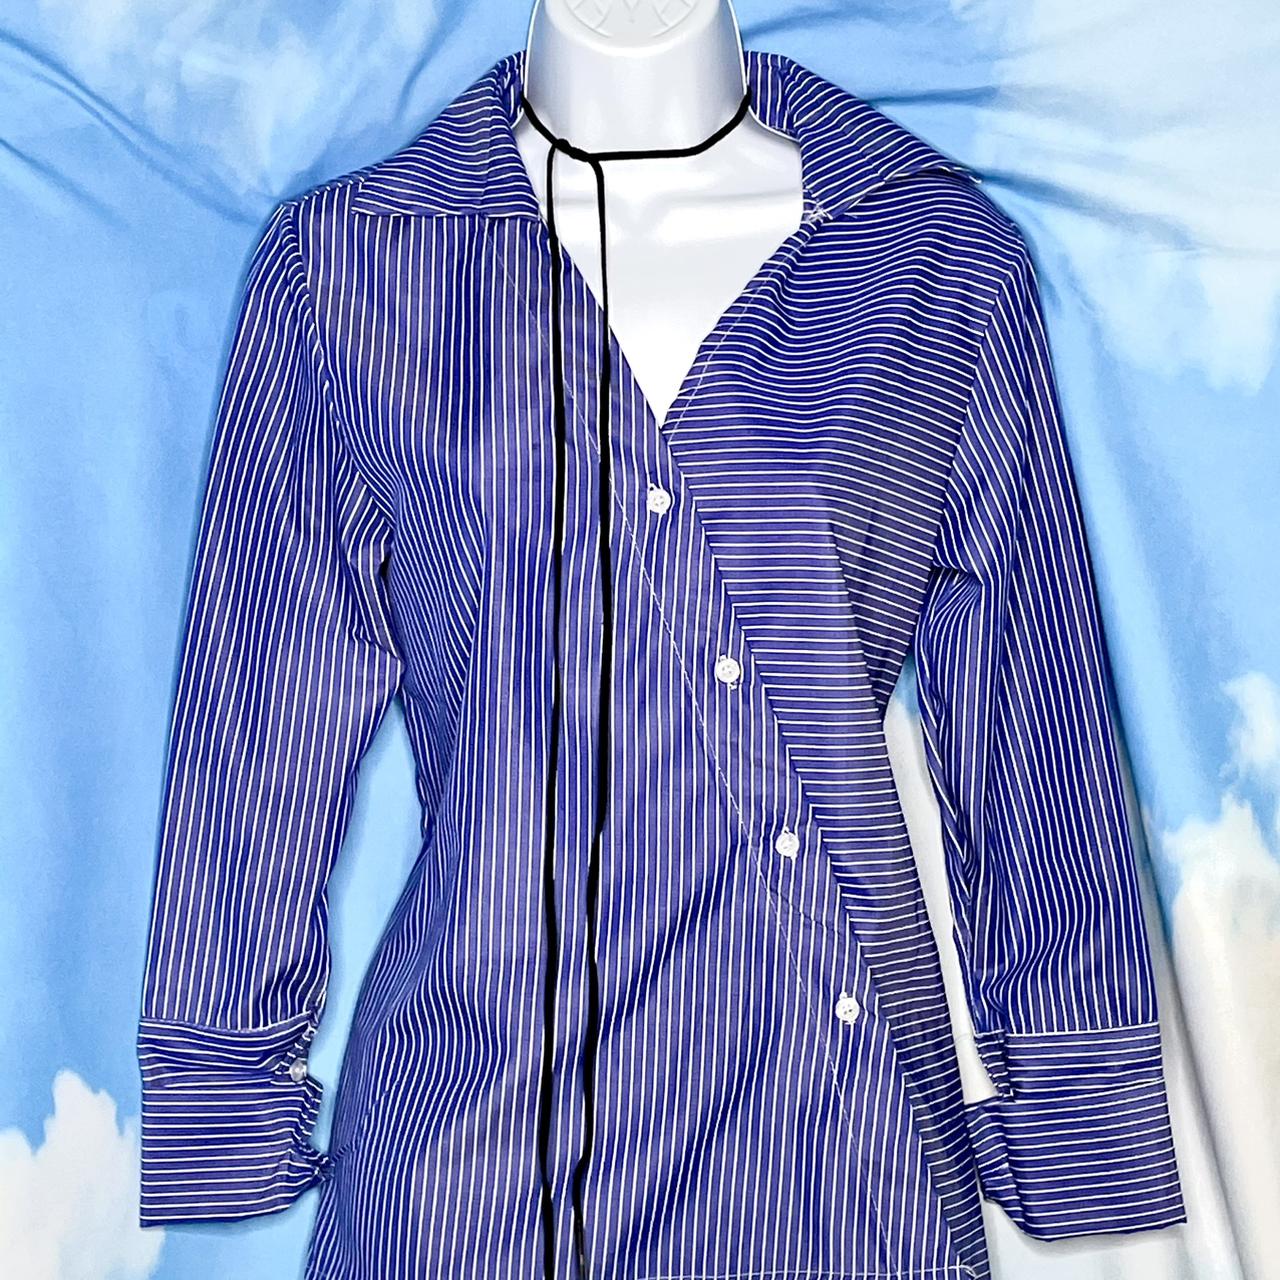 Hollister Button Down Pin Striped Shirt XS Blue - $10 - From ThriftnThreads